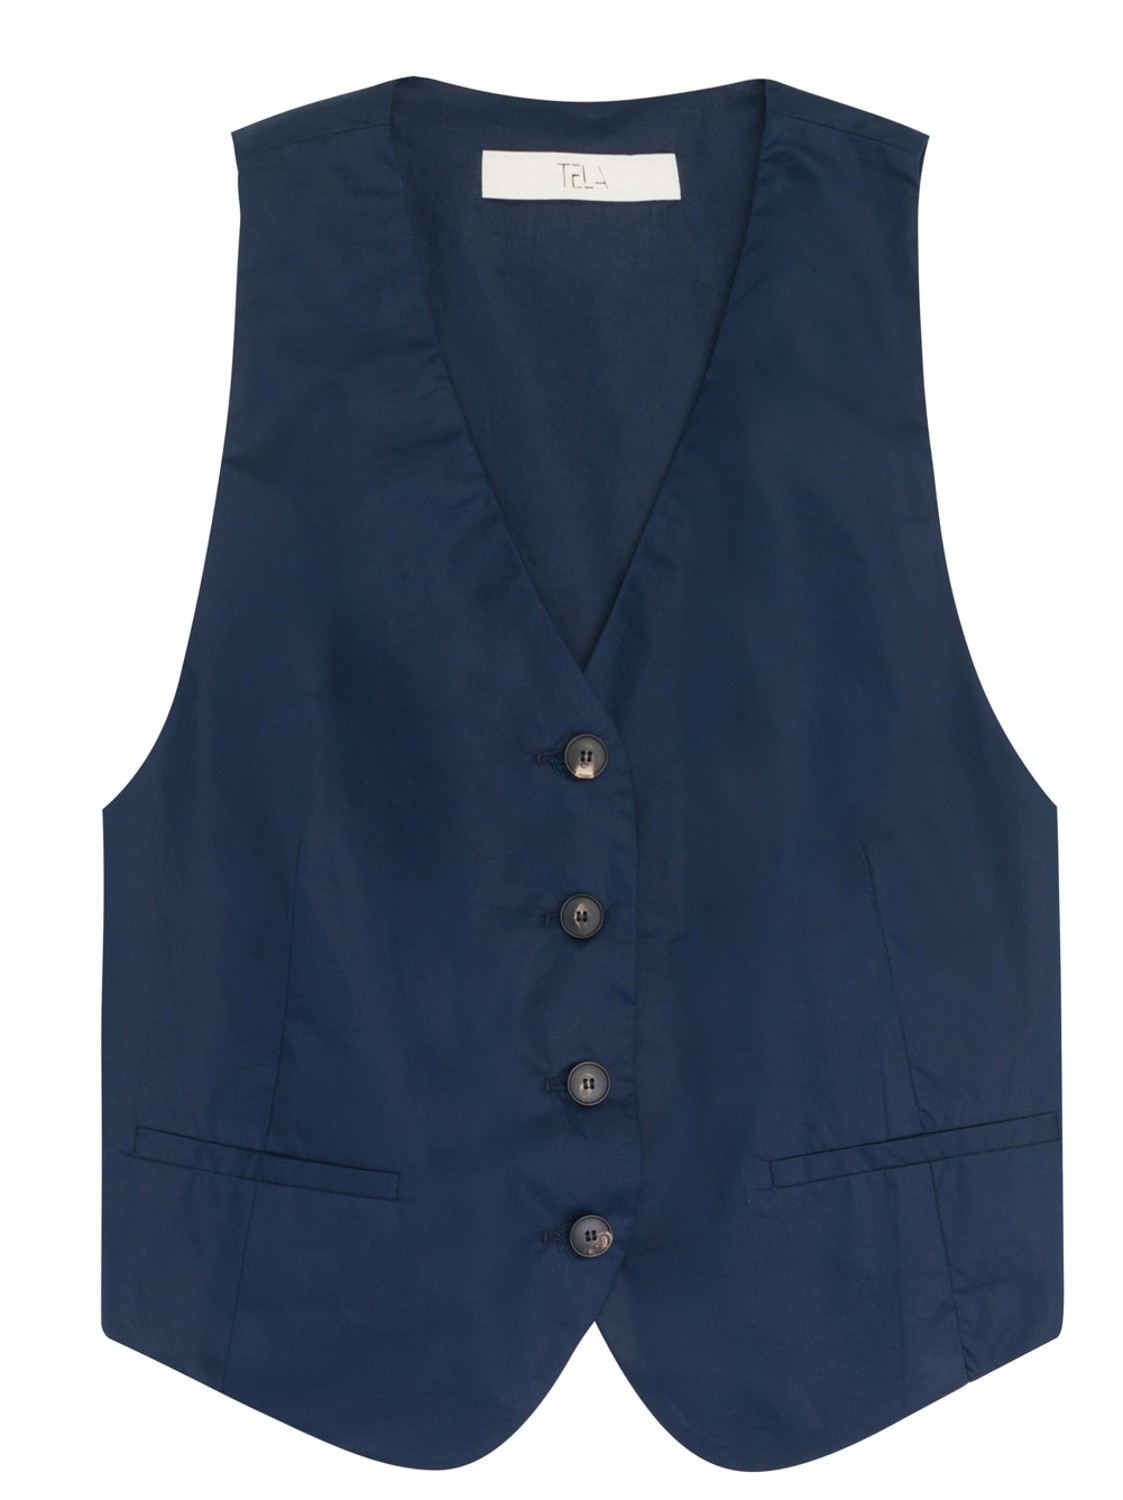 shop Tela  Vest: Vest Tela, Brunei model, gilet under blazer, front buttons closure, lateral pockets,

Composition: 100% cotton. number 2558